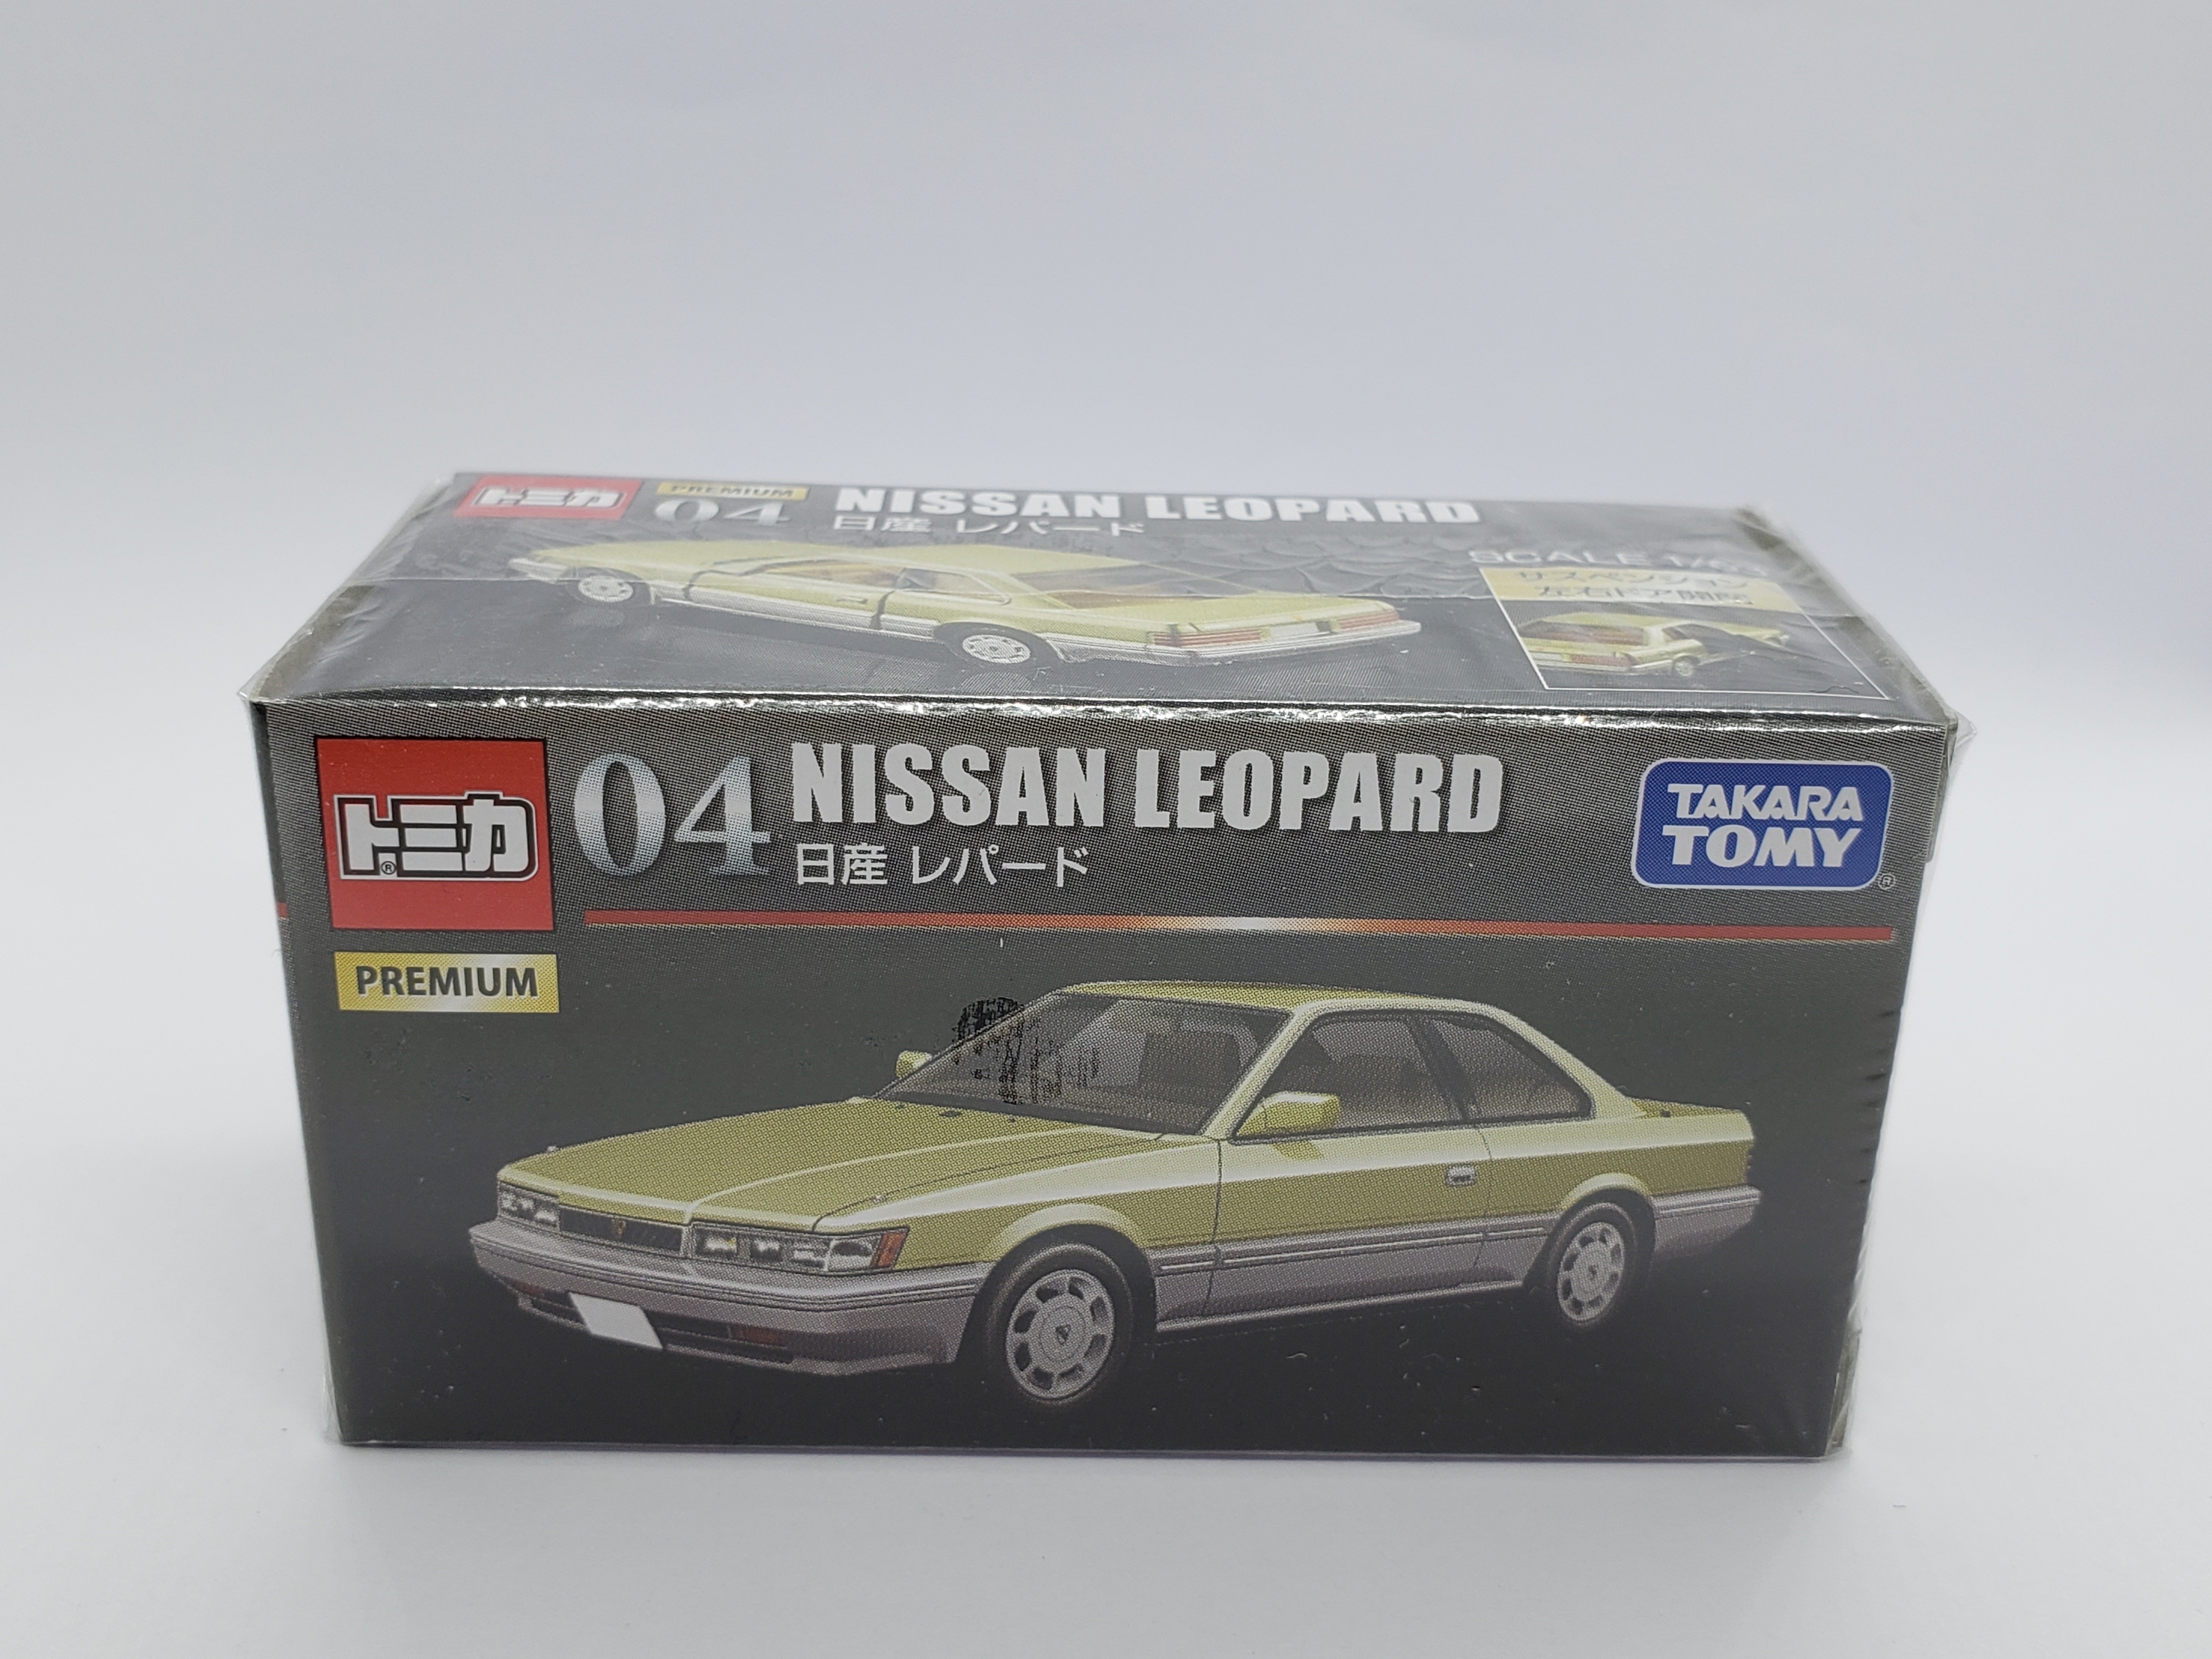 Takara Tomy Tomica Premium No. 04 Nissan Leopard 2018